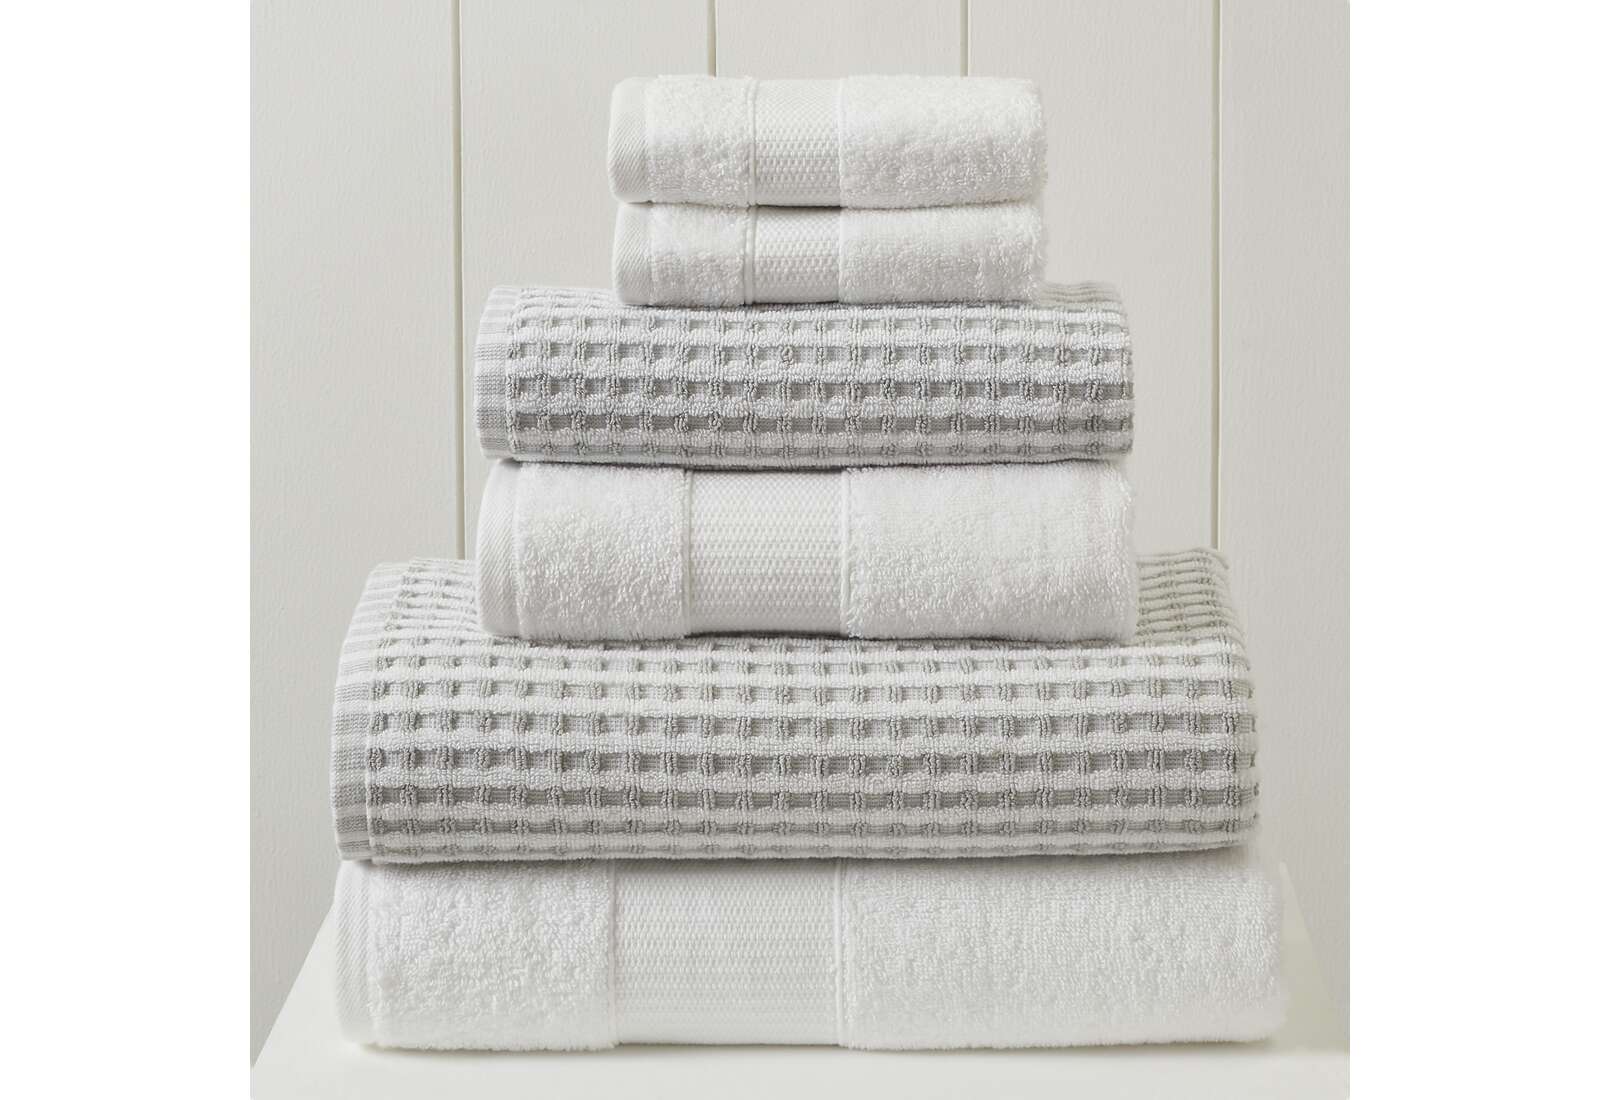 Bath Towels 101: How to Choose Towels